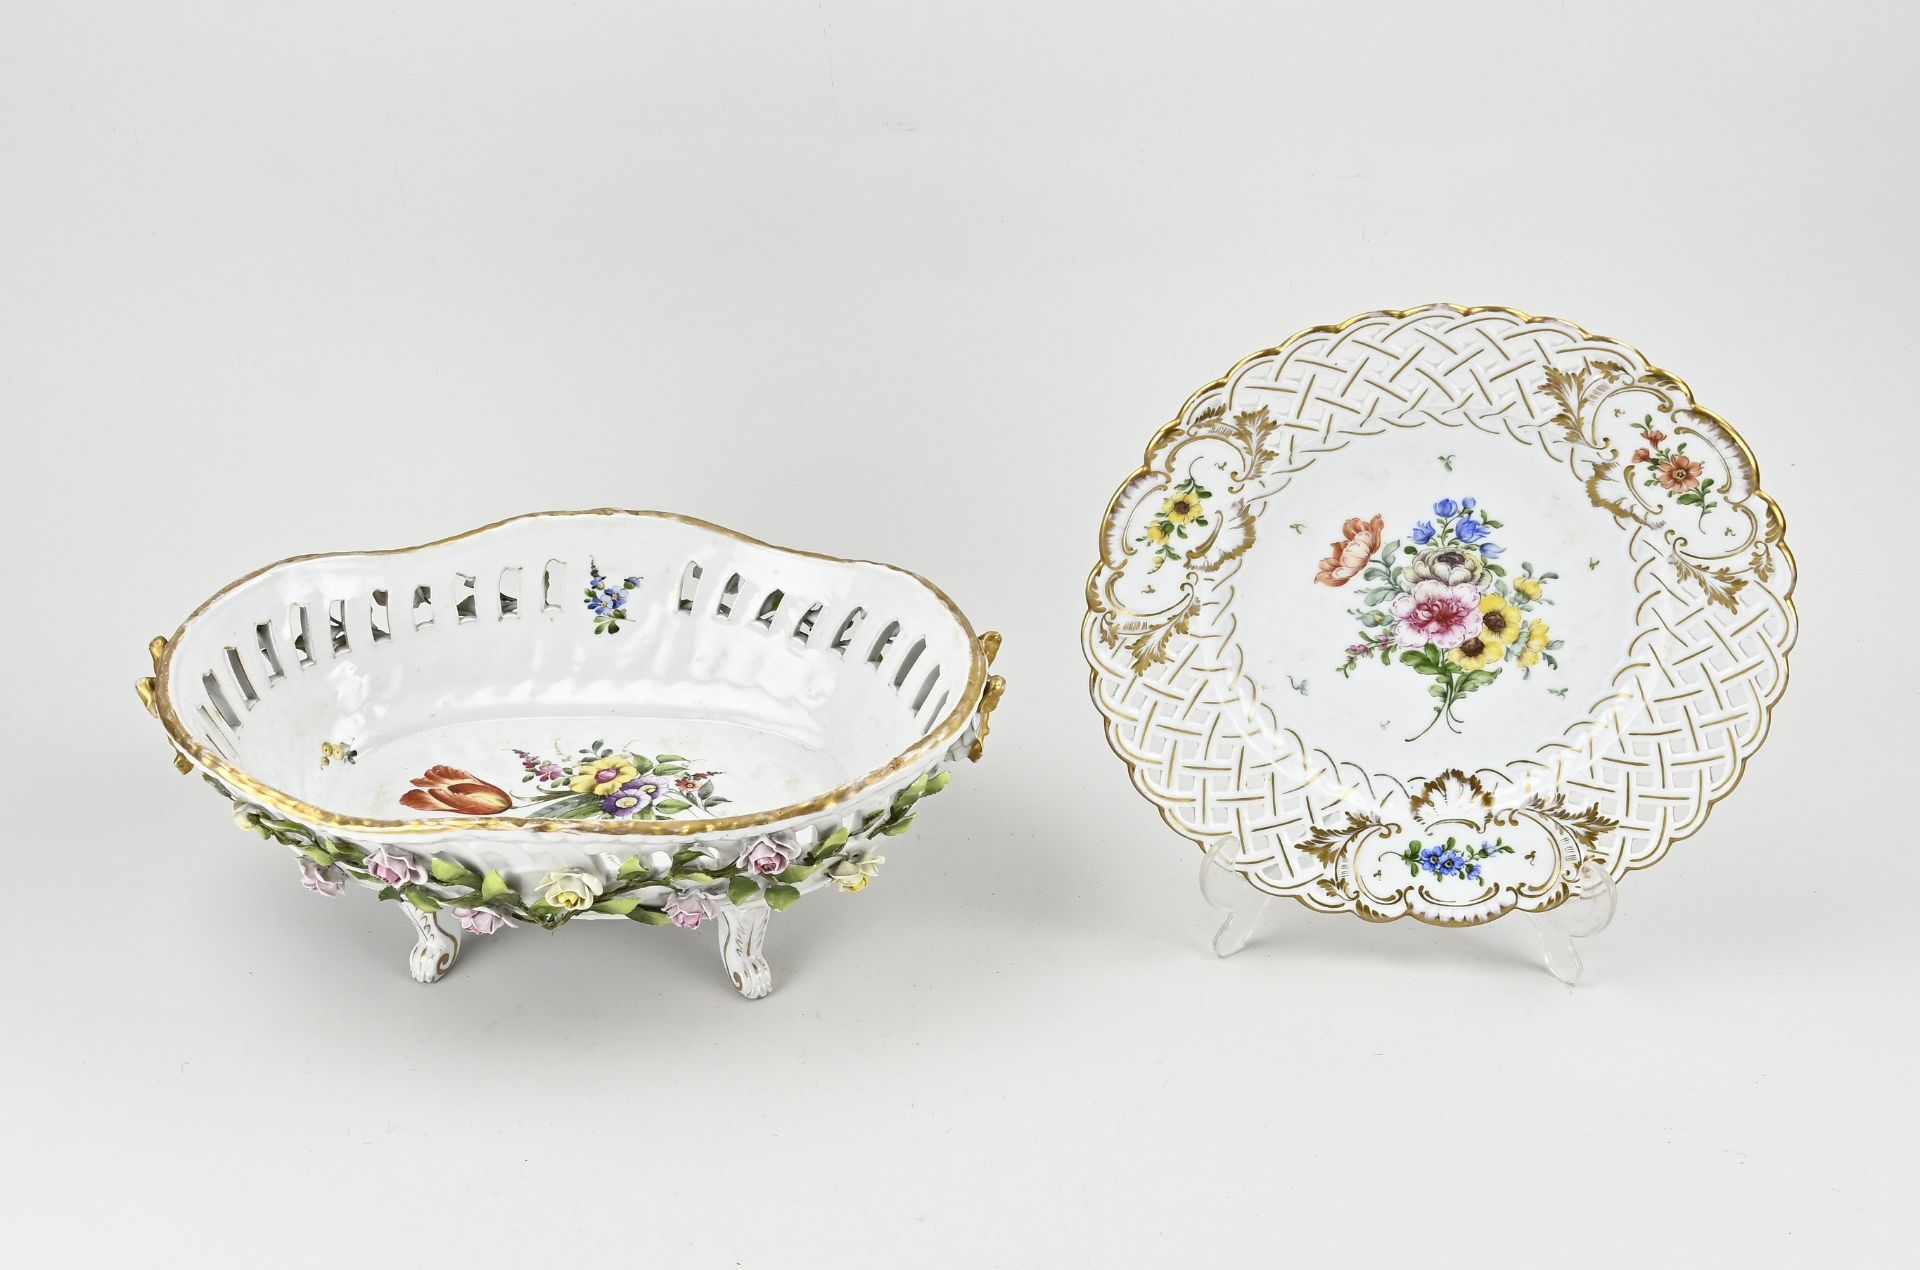 Two volumes of German porcelain